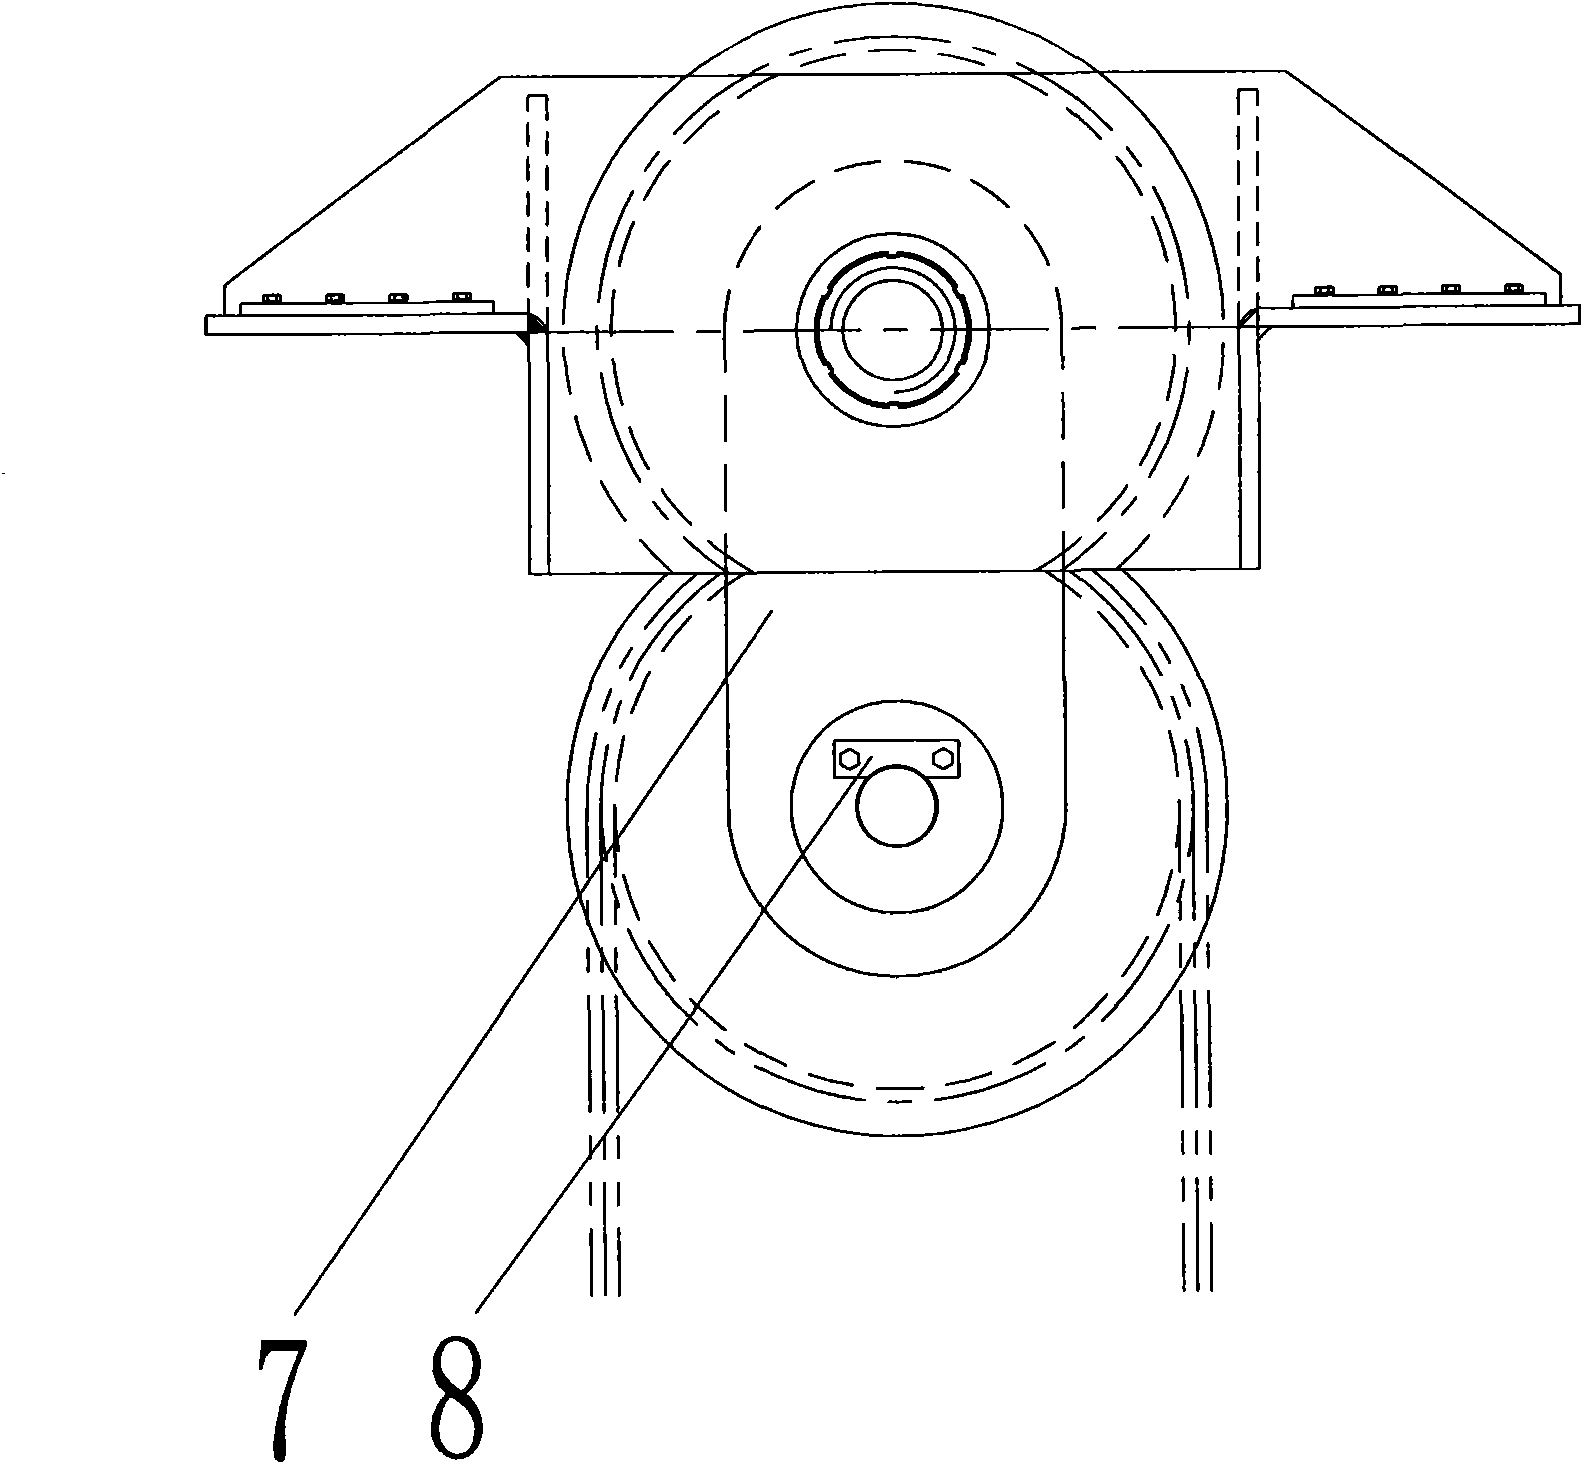 Novel weighing device structure of shipbuilding gantry crane